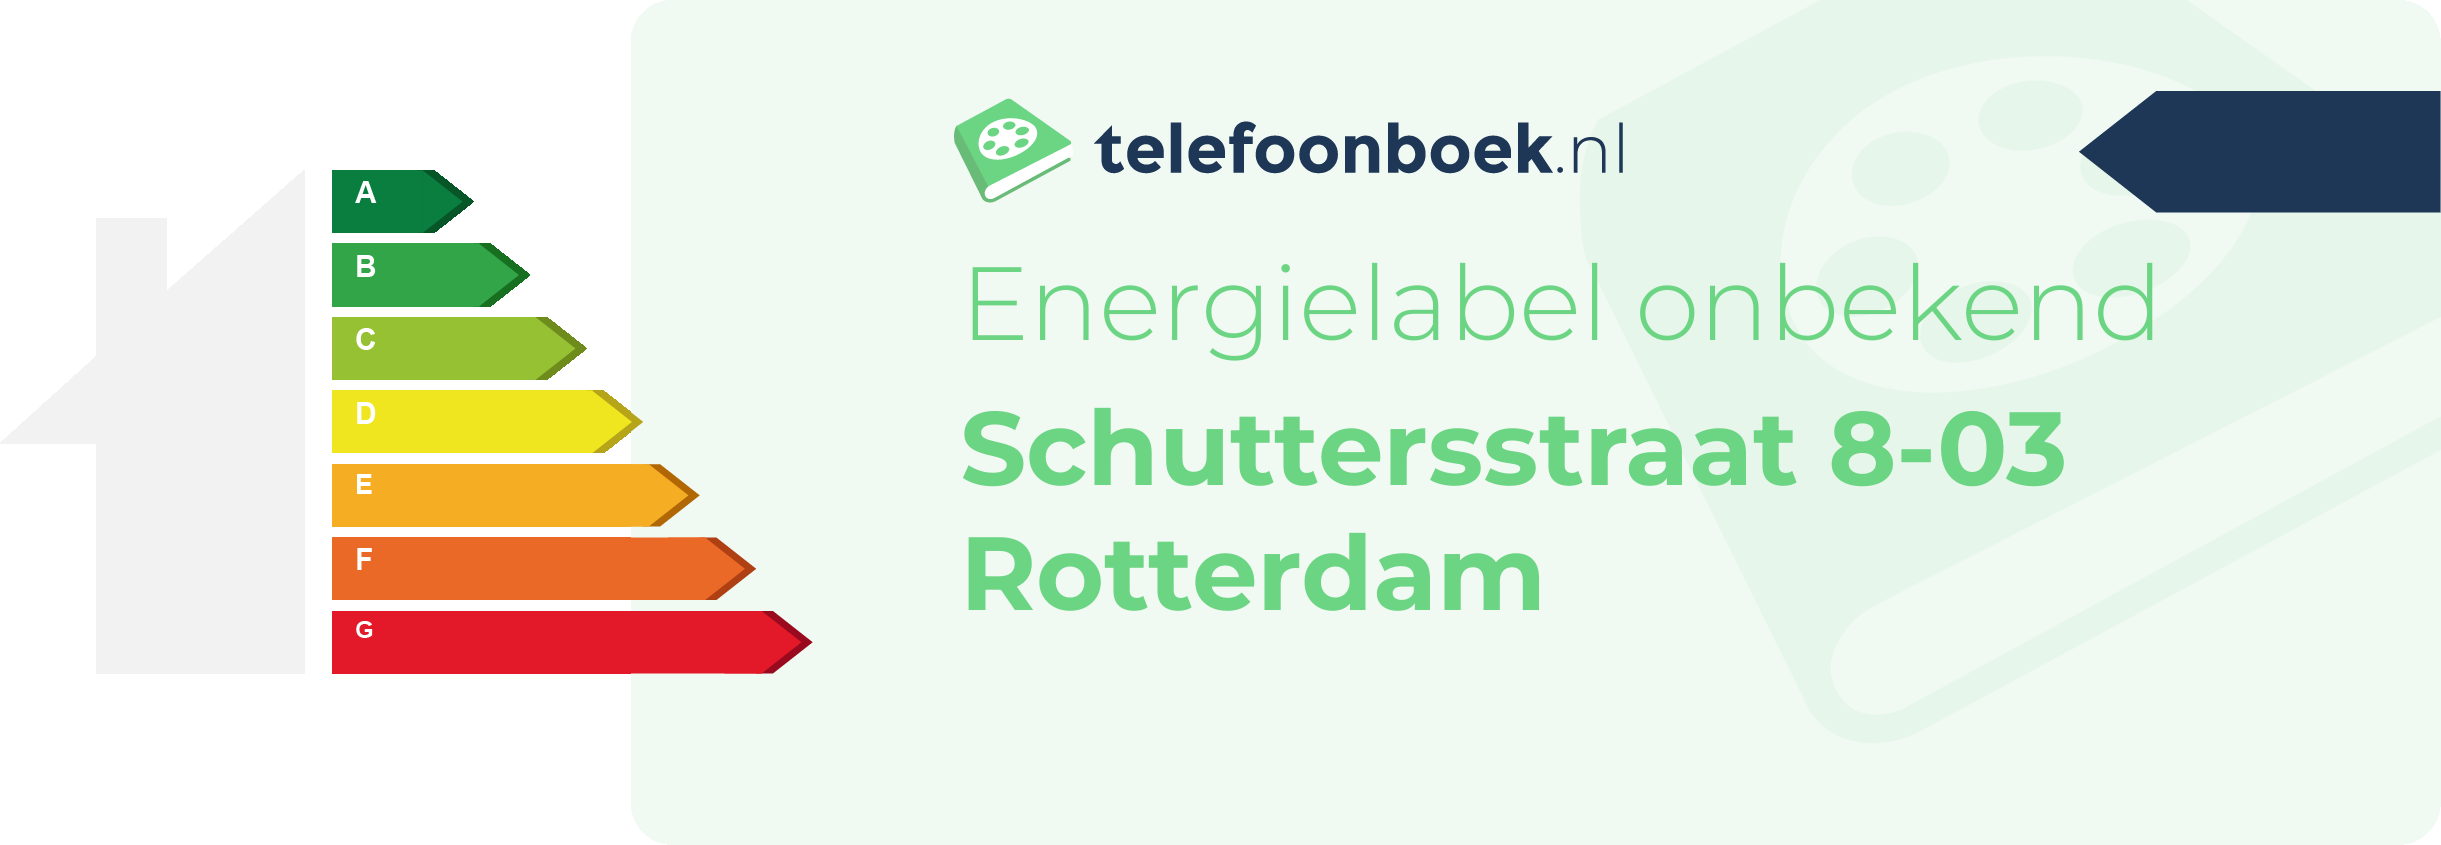 Energielabel Schuttersstraat 8-03 Rotterdam